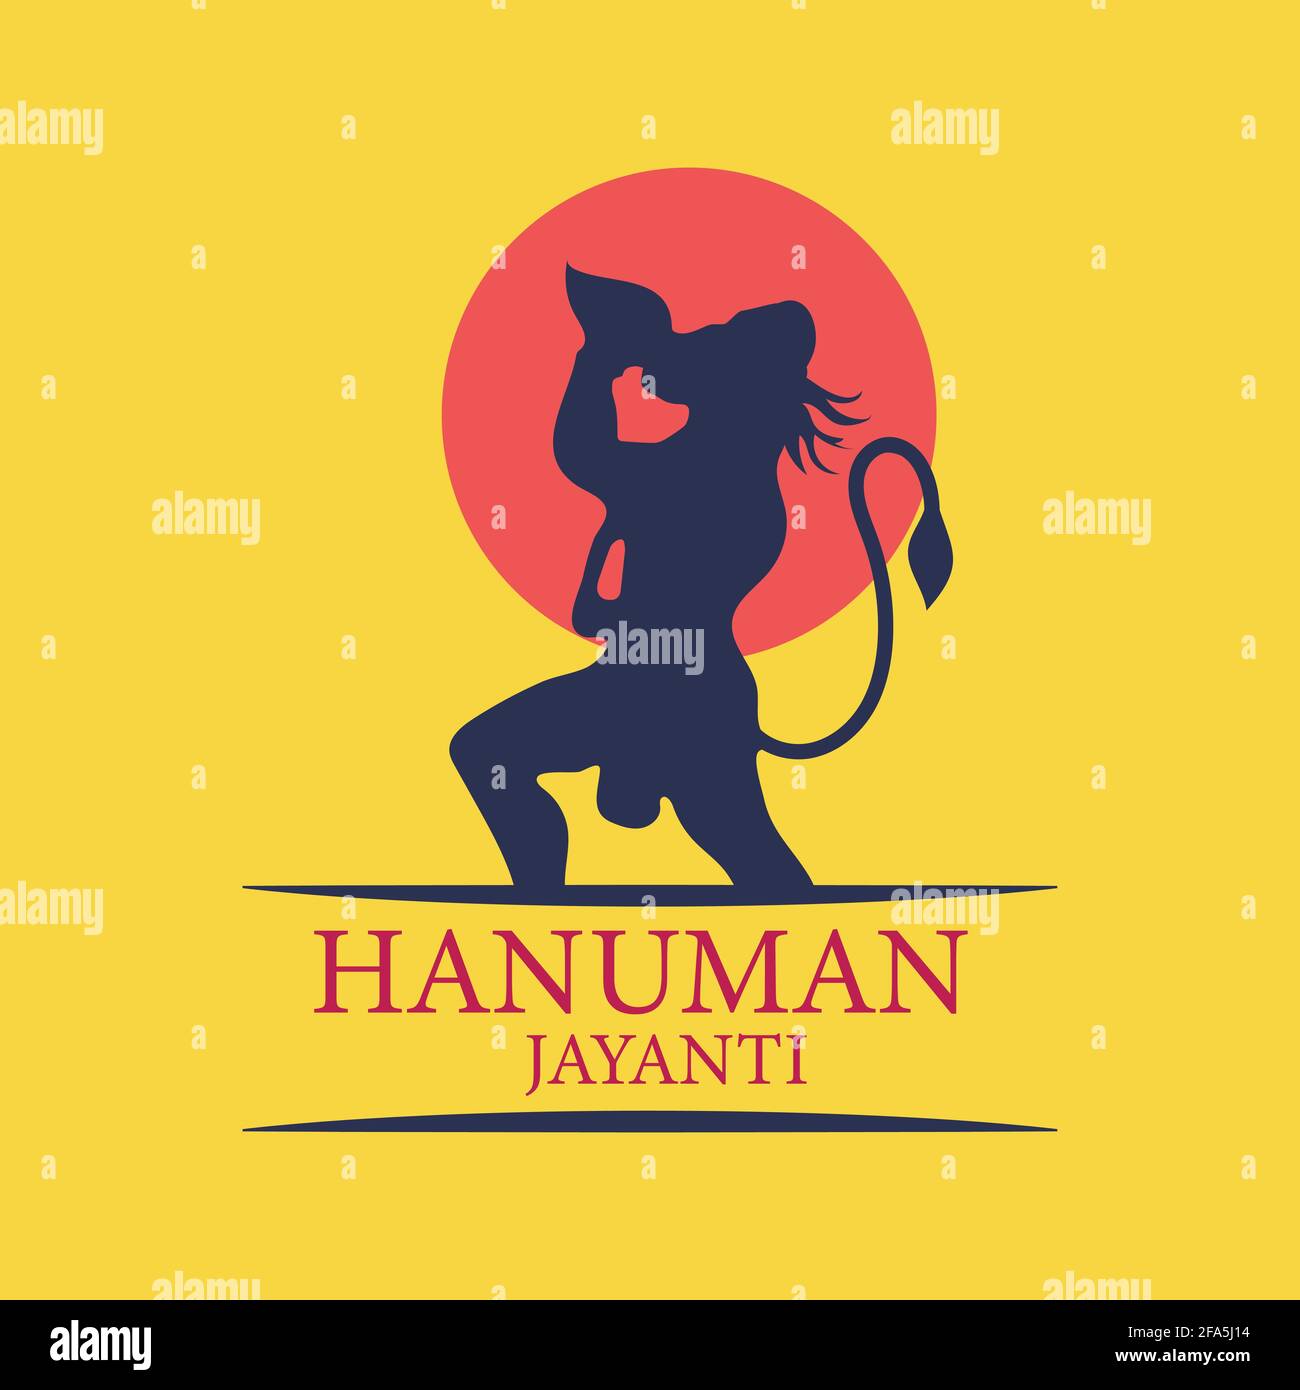 Hanuman Jayanti vector poster background, God illustration design wallpaper banner Stock Vector